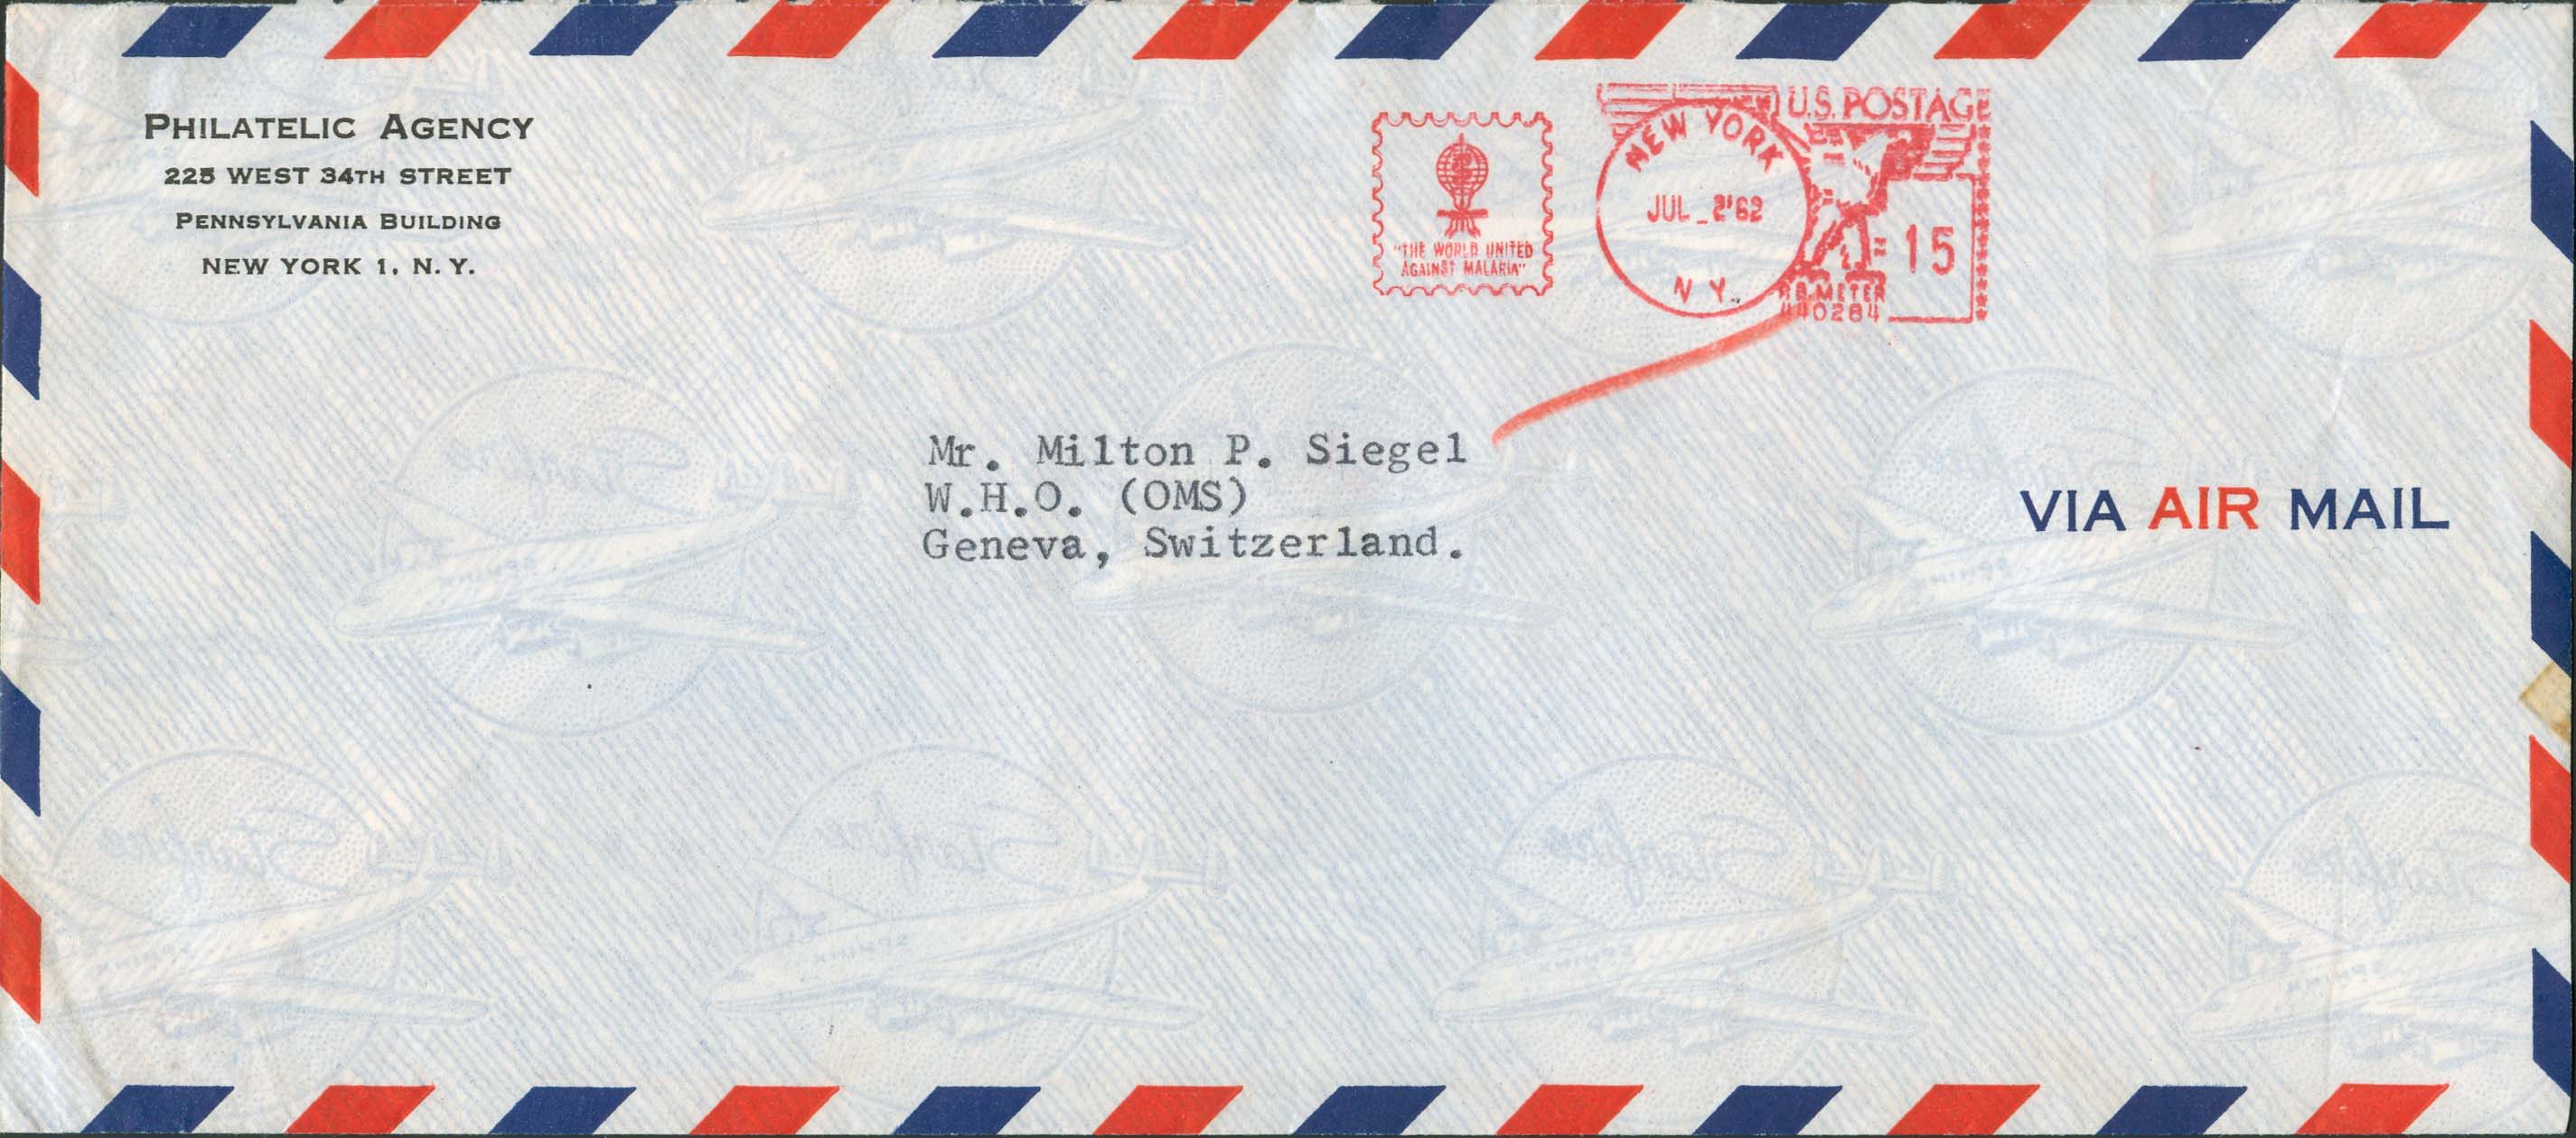 07/02/1962, International Airmail Letter